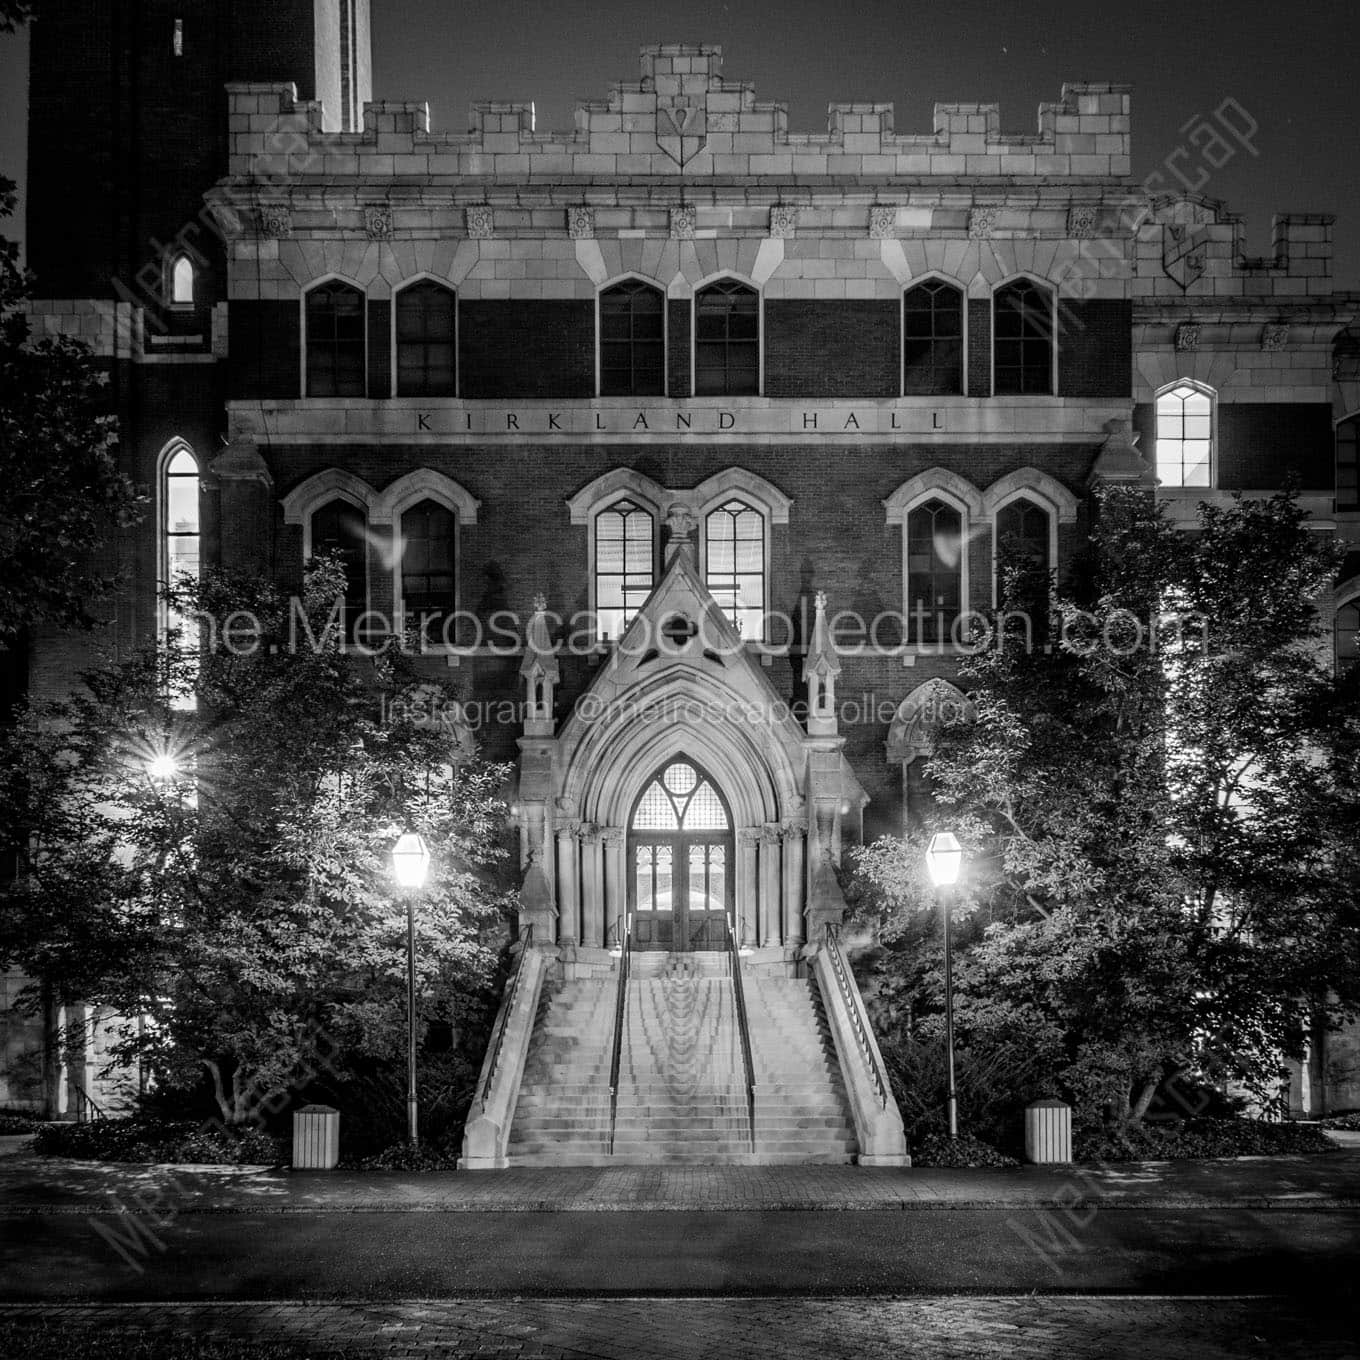 kirkland hall vanderbilt university at night Black & White Wall Art